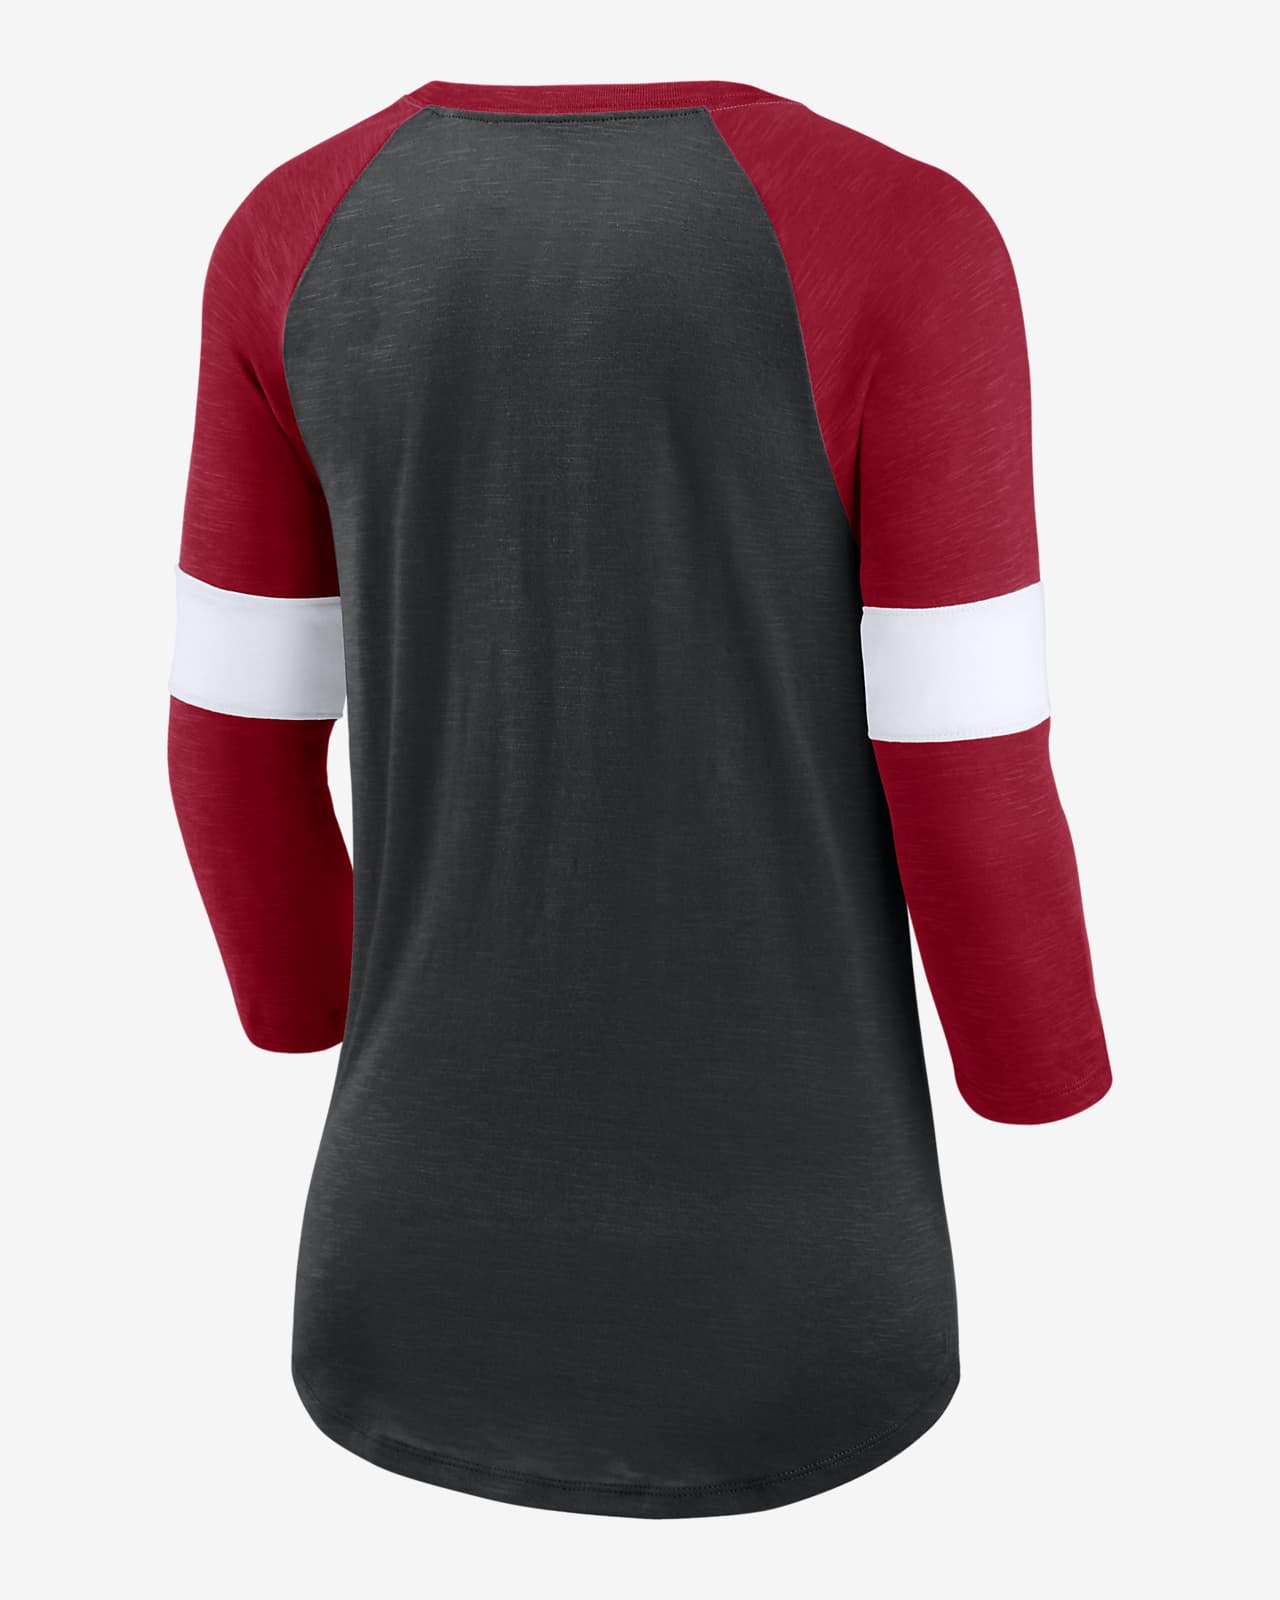 women's san francisco 49ers jersey